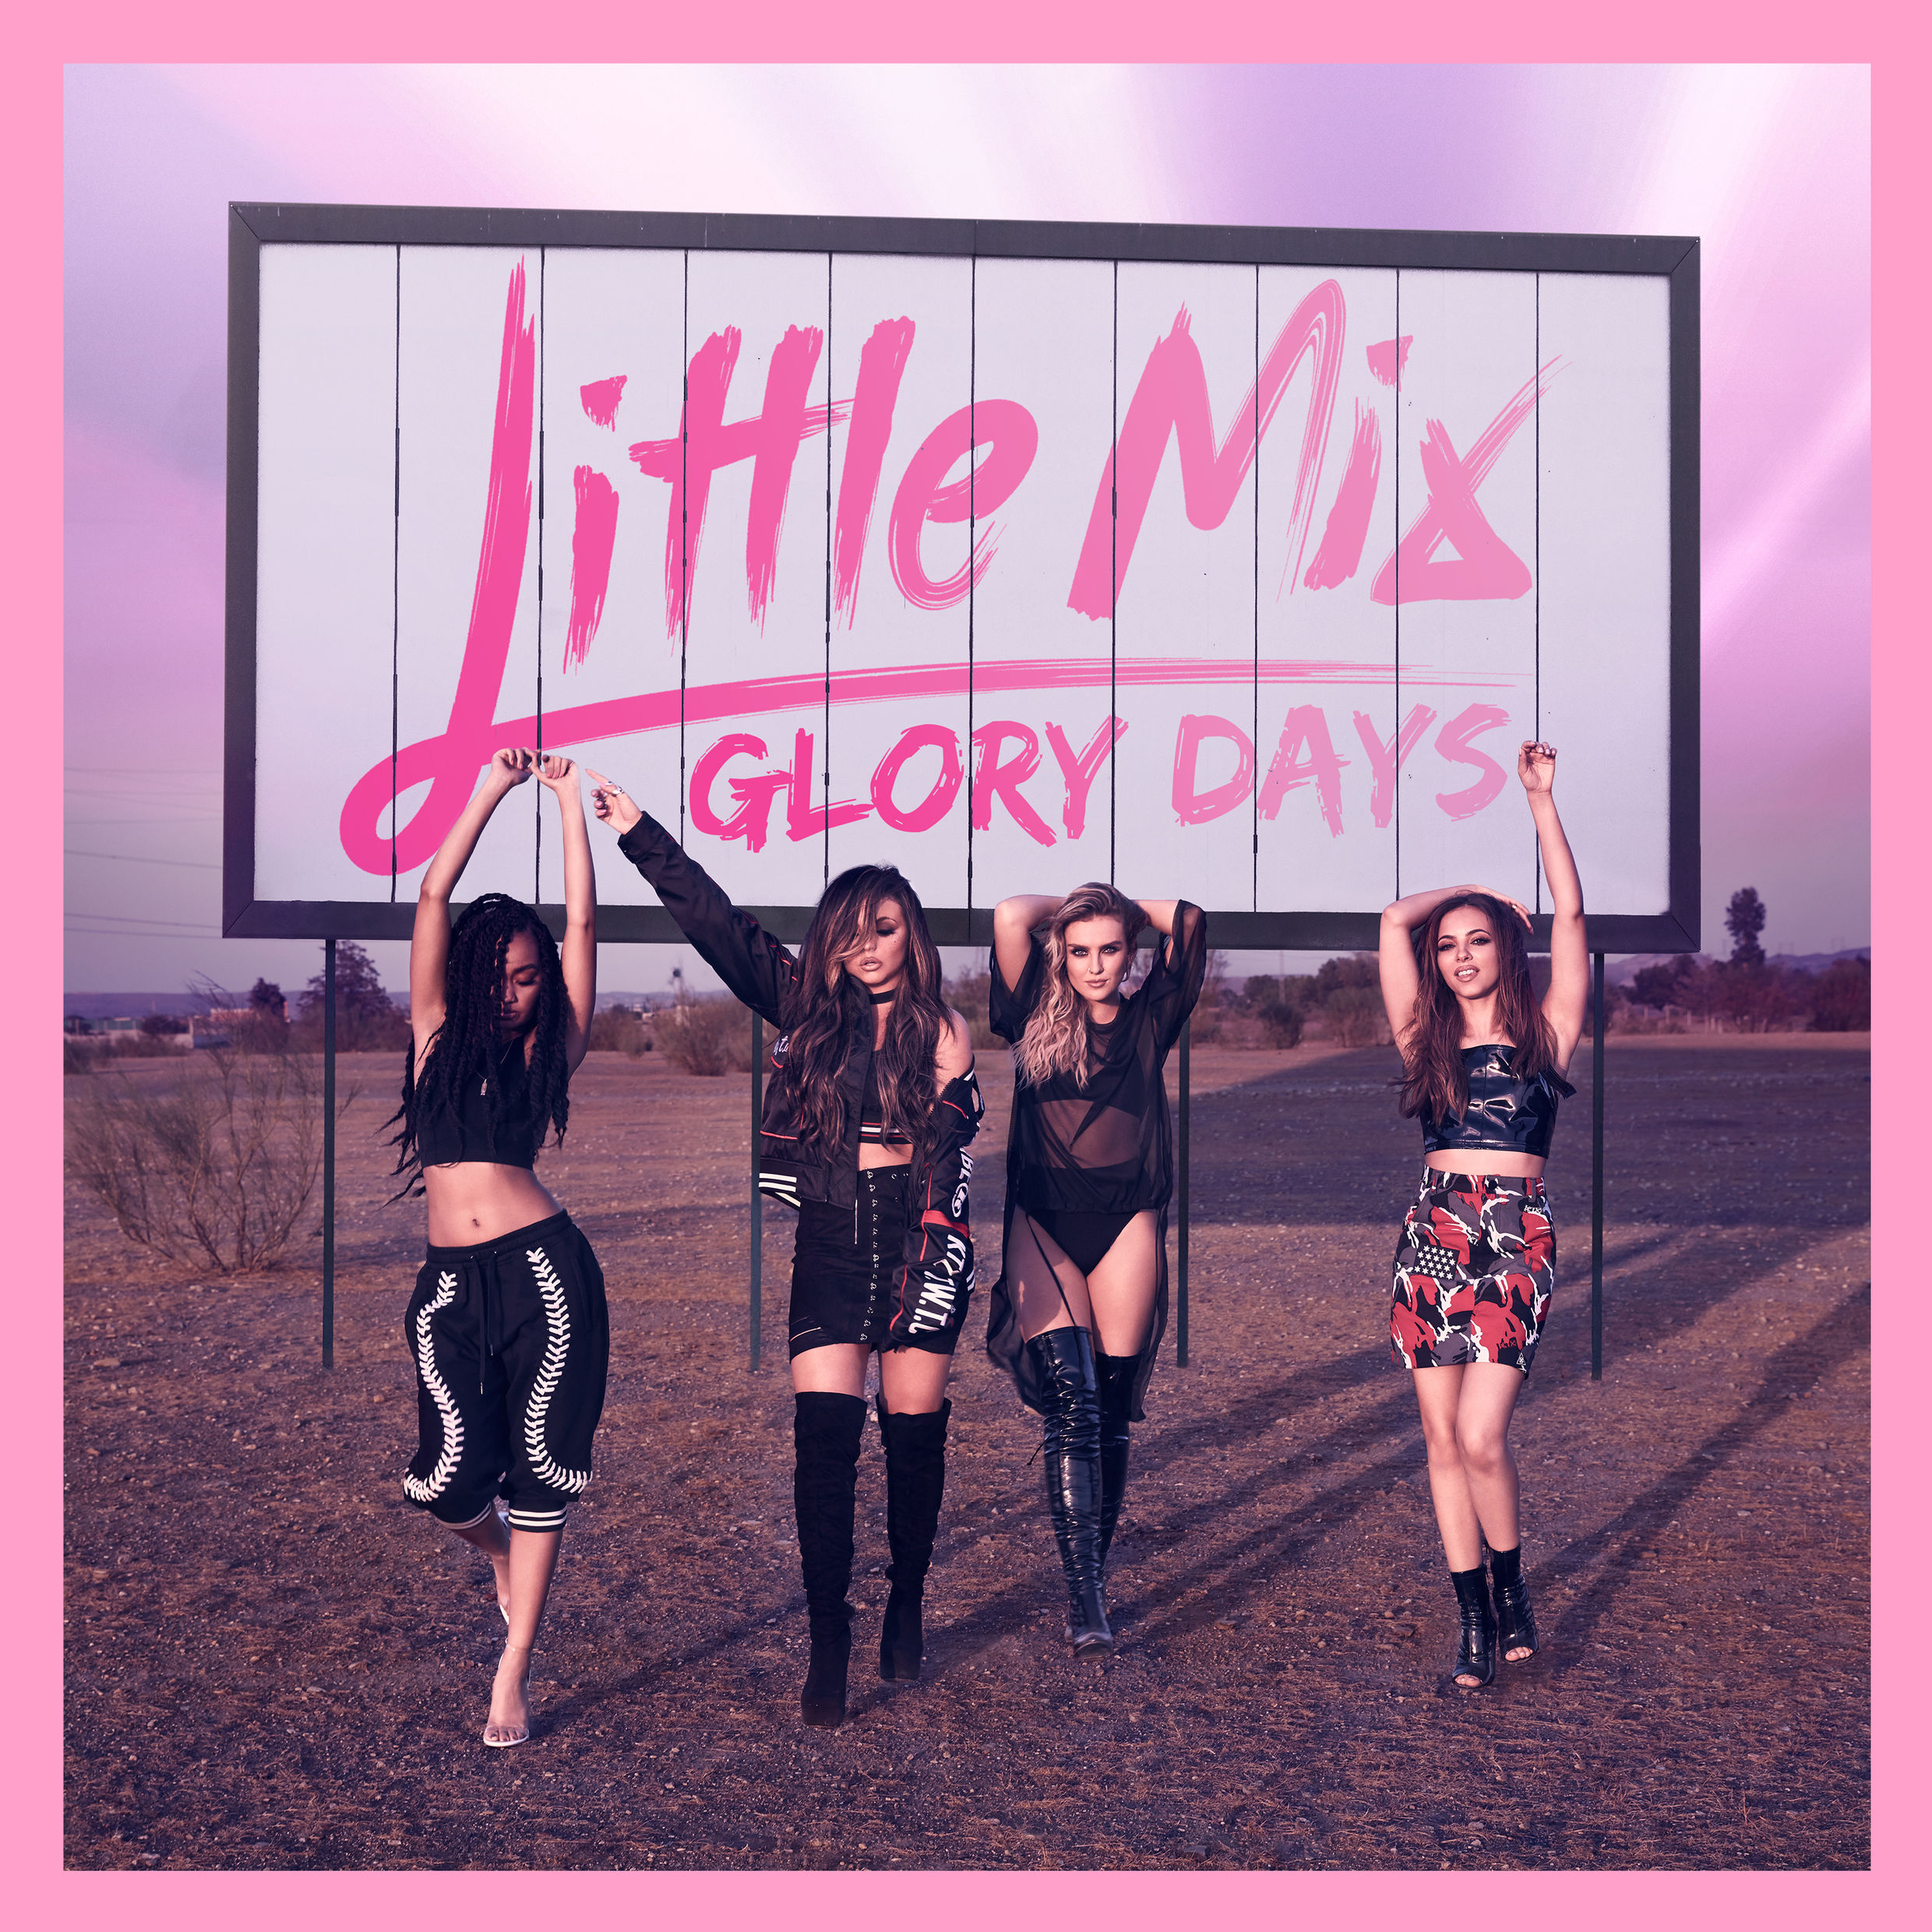 Little Mix - Glory Days (album artwork cover)